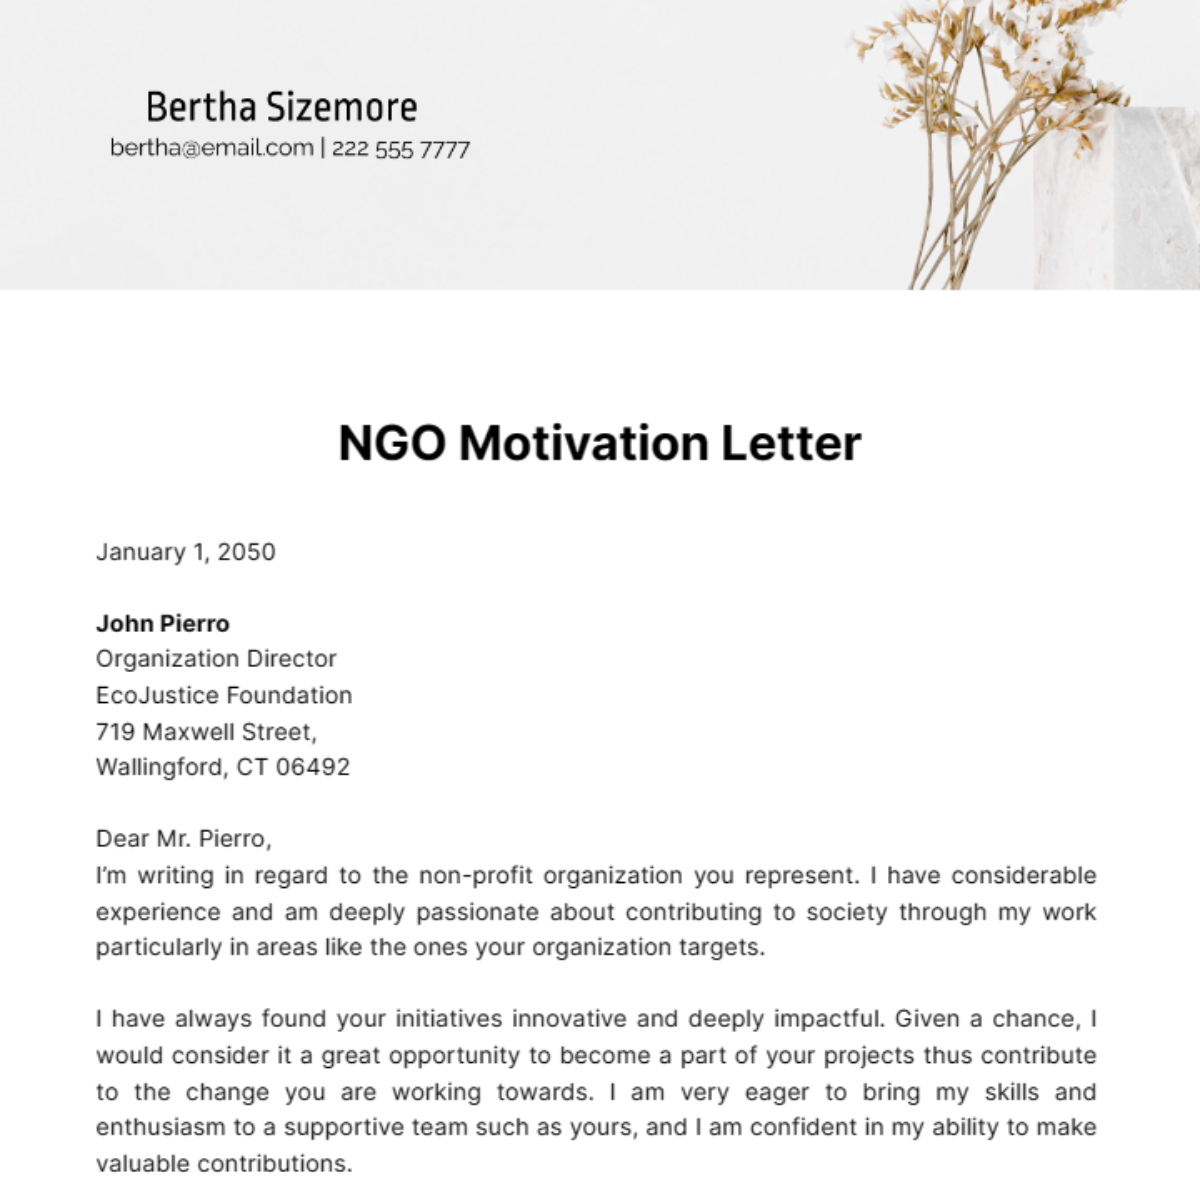 NGO Motivation Letter Template